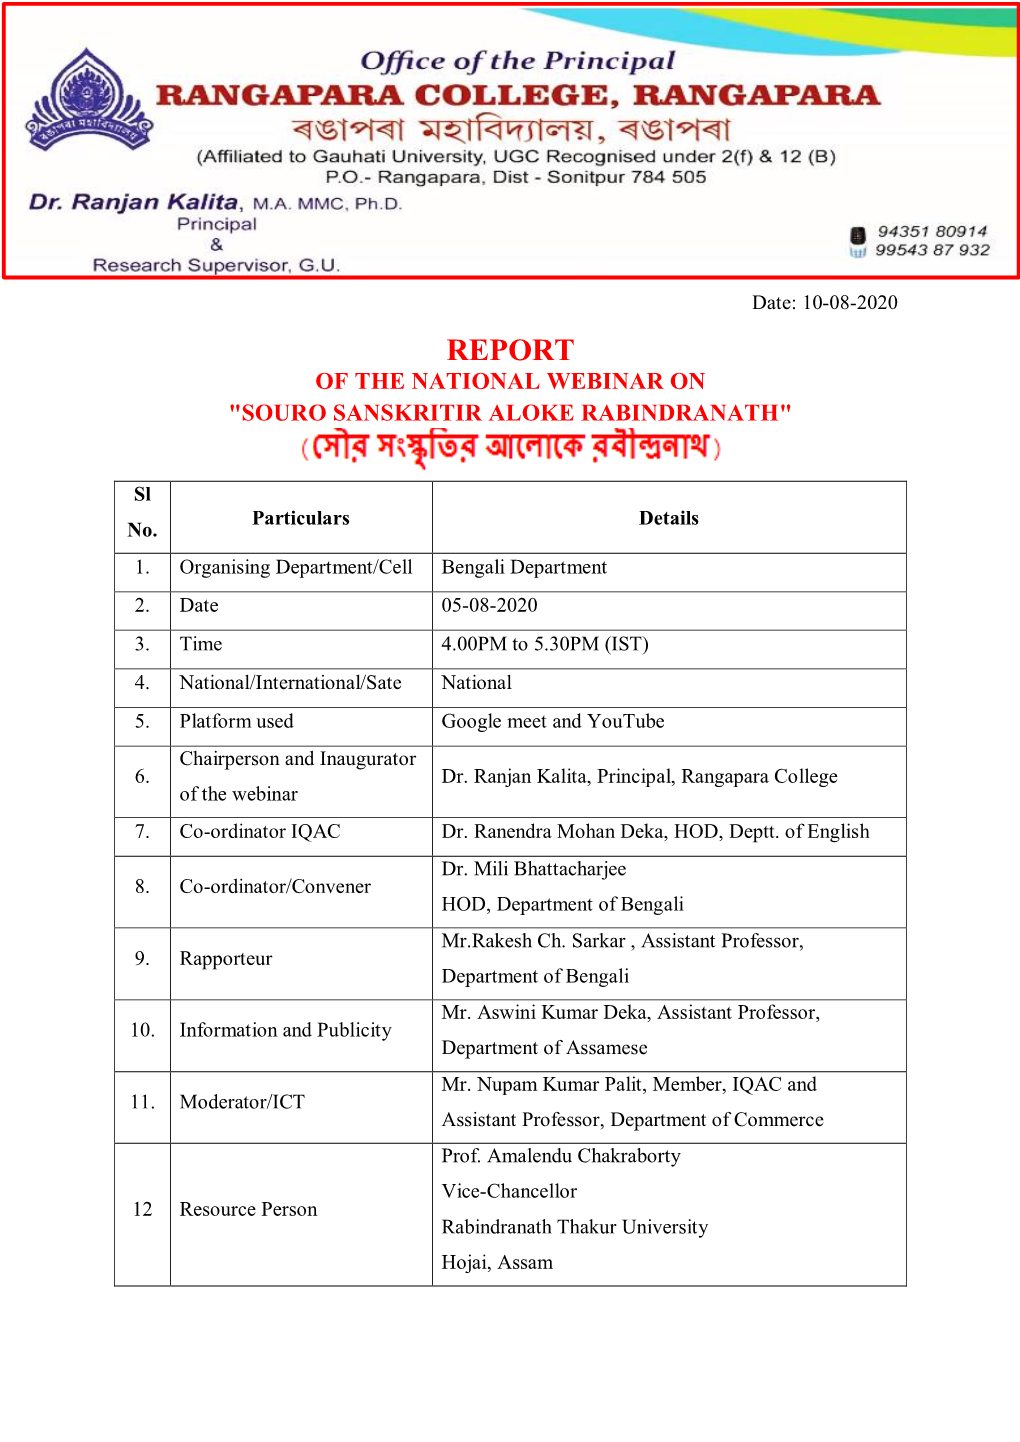 Report of the National Webinar on "Souro Sanskritir Aloke Rabindranath"